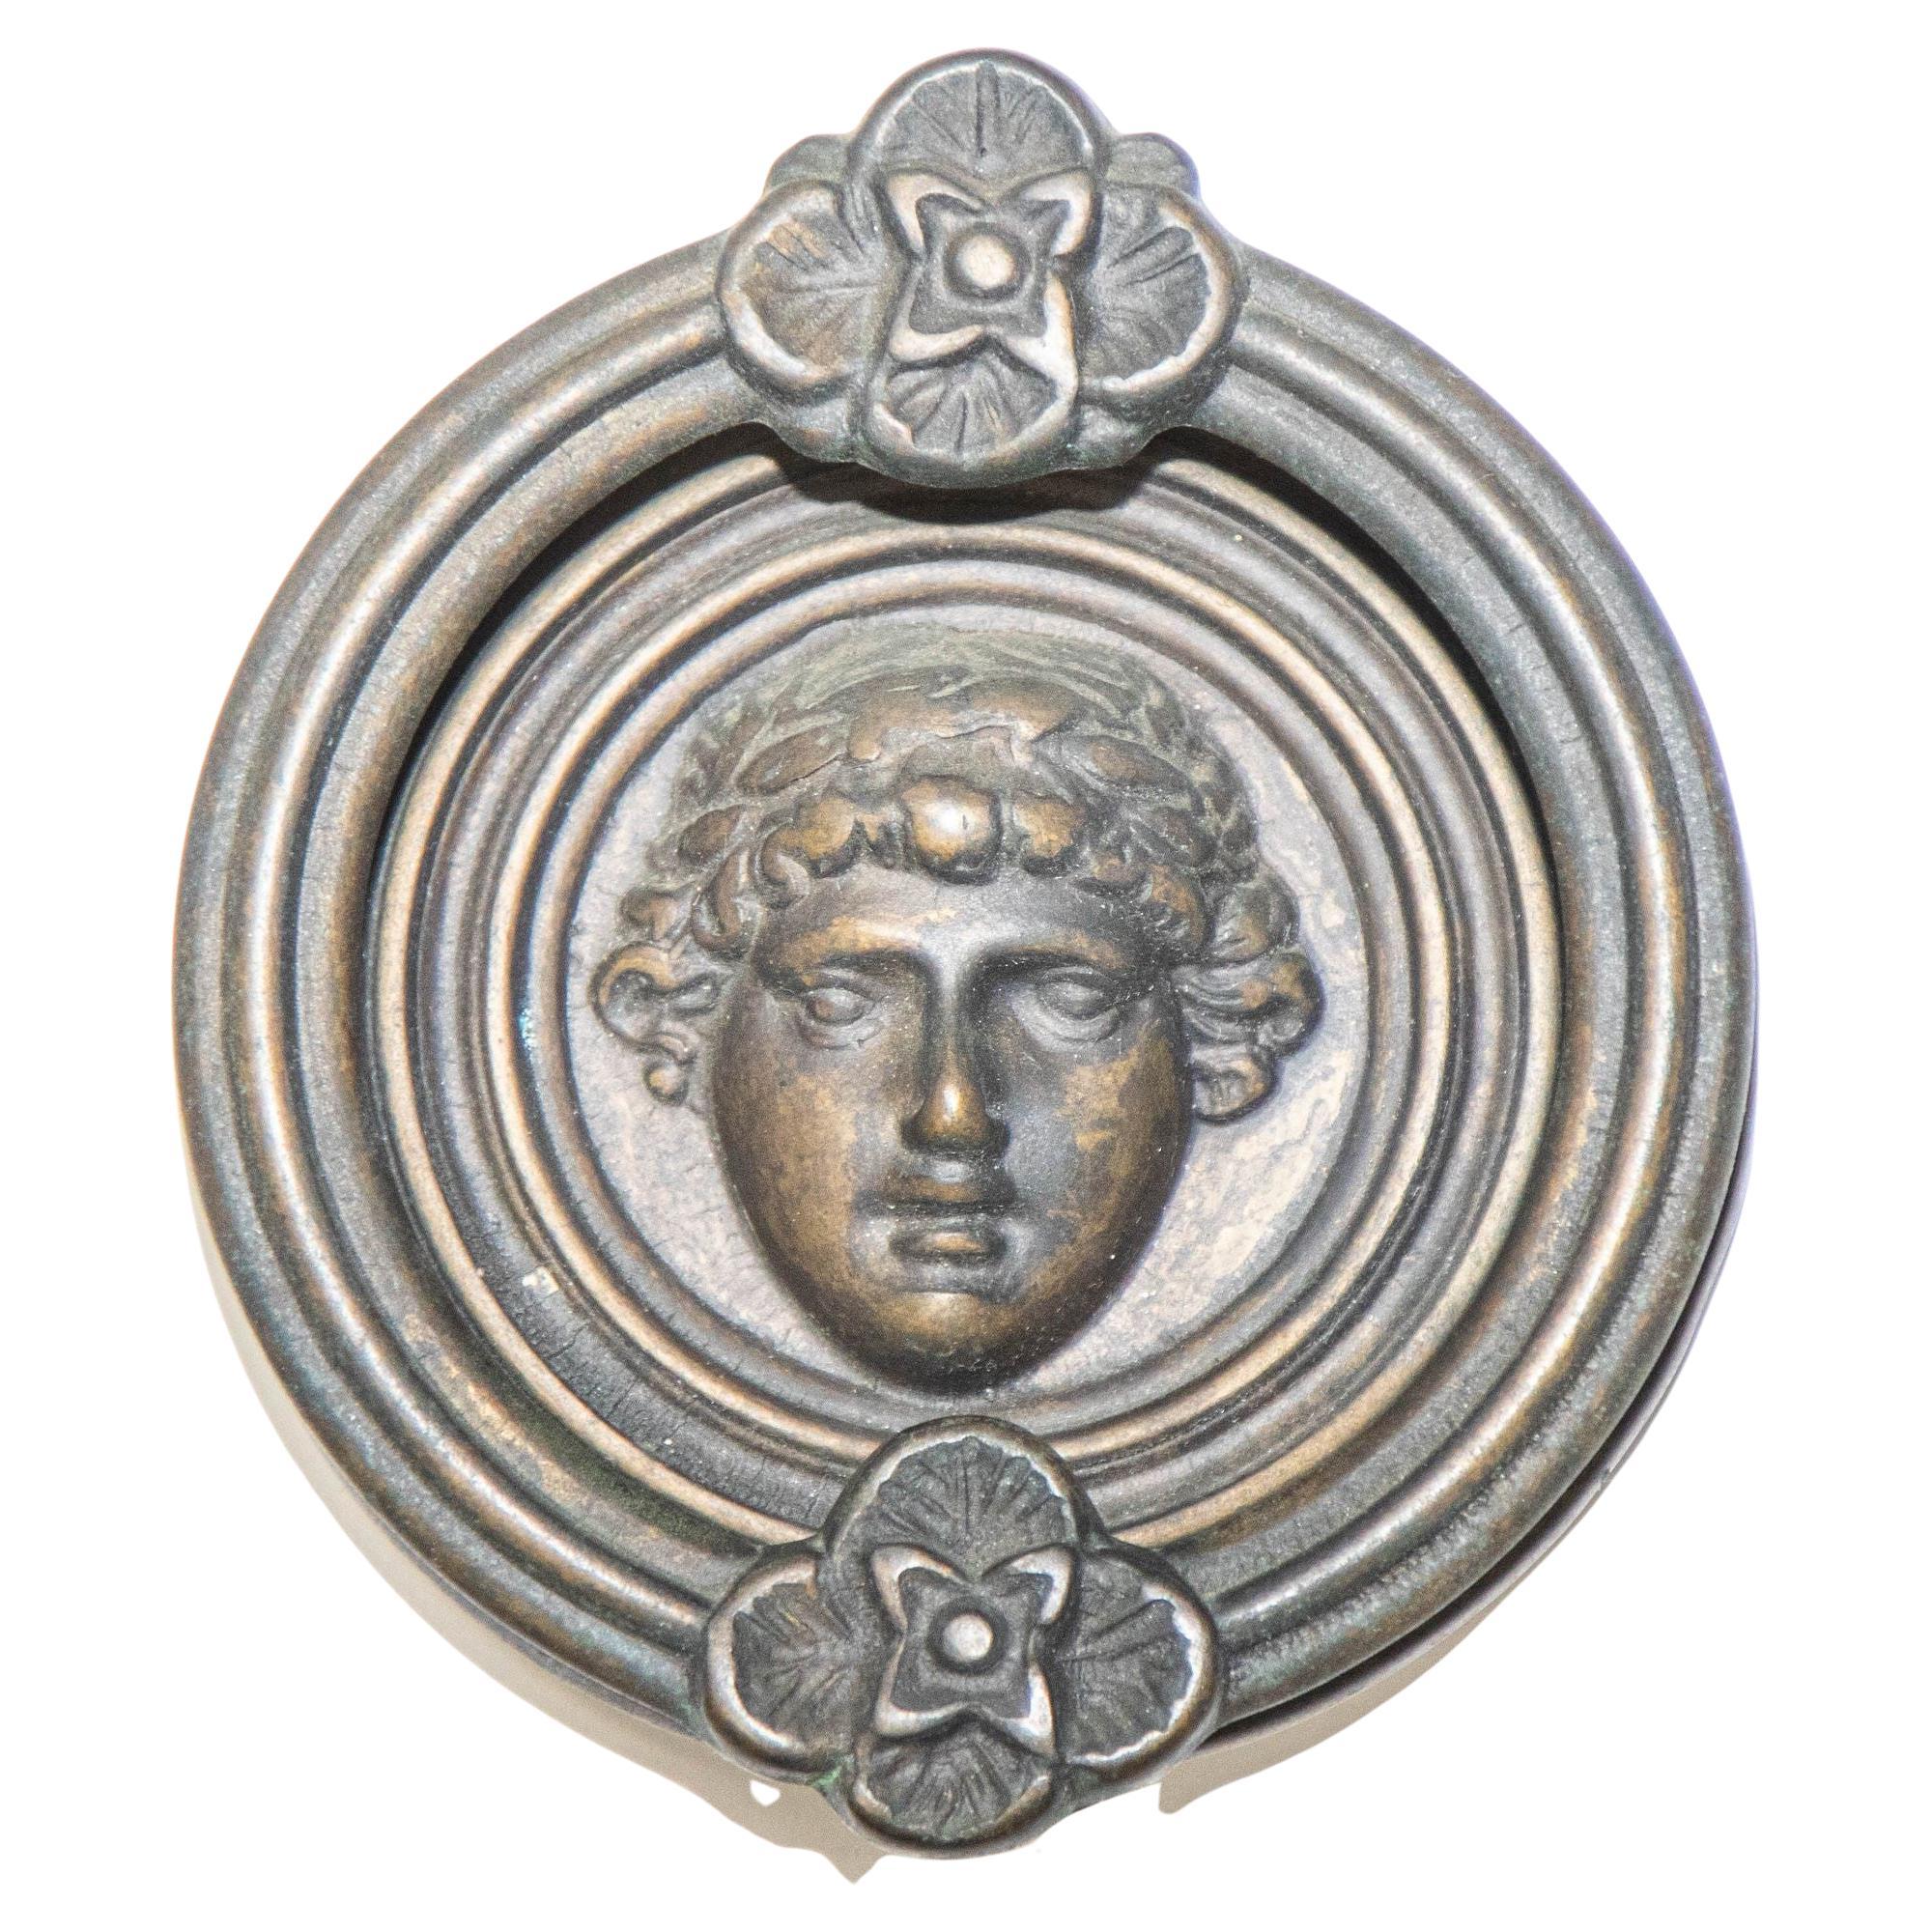 Bronze Round Door Knocker with Goddess Athena Figure